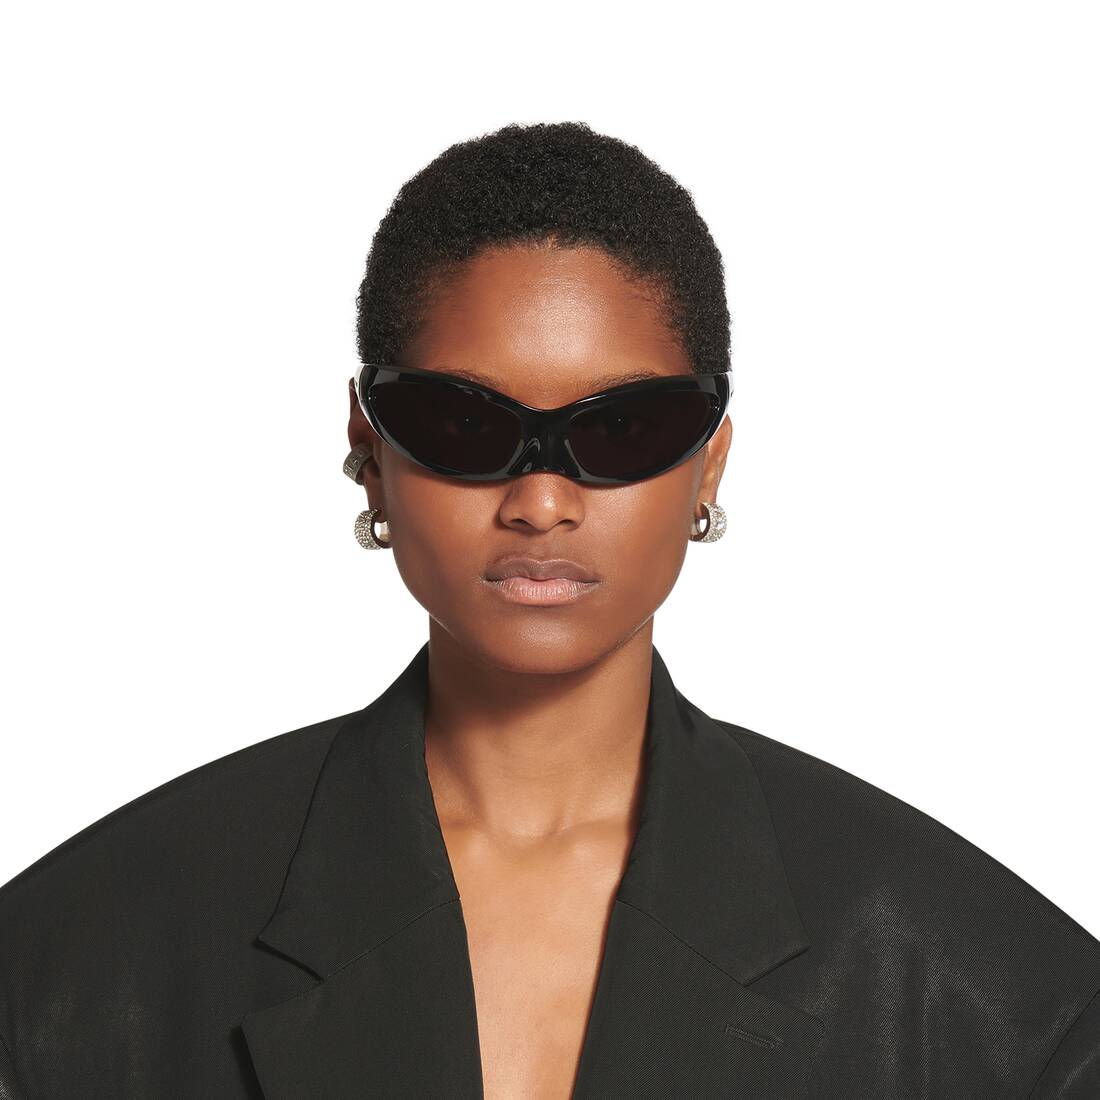 Balenciaga Eyewear Cat-Eye Optical Glasses - Black